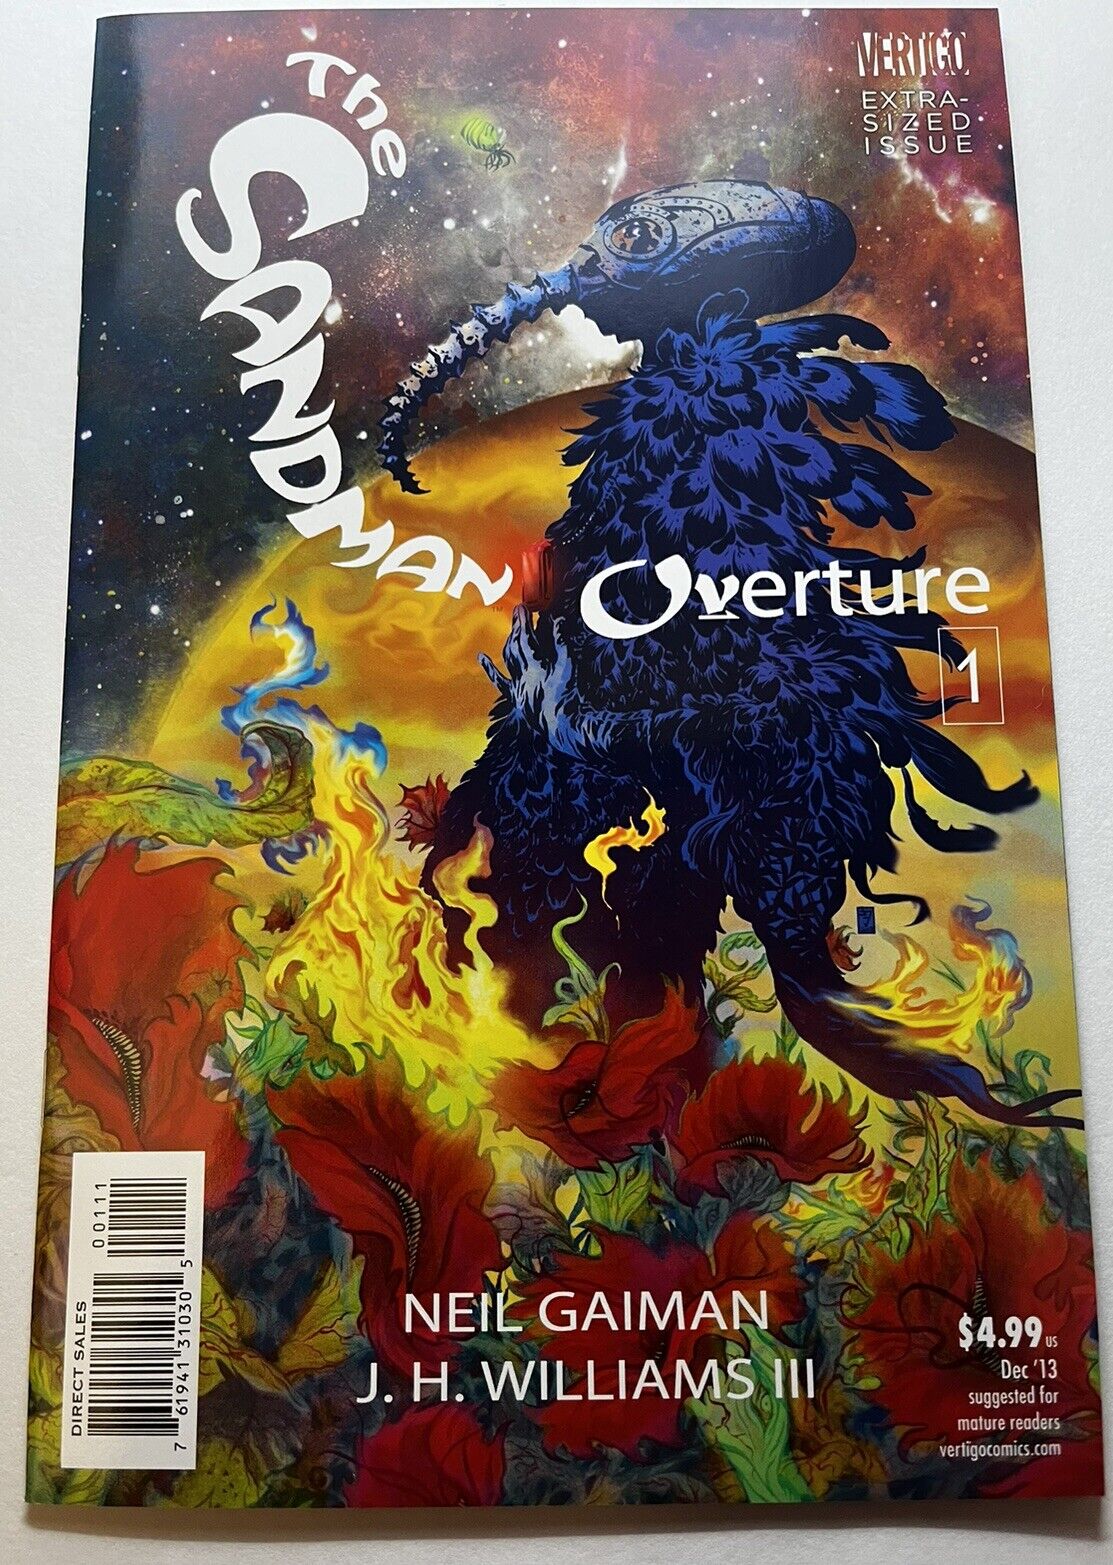 The Sandman Overture #1 - Vertigo Extra-sized Issue